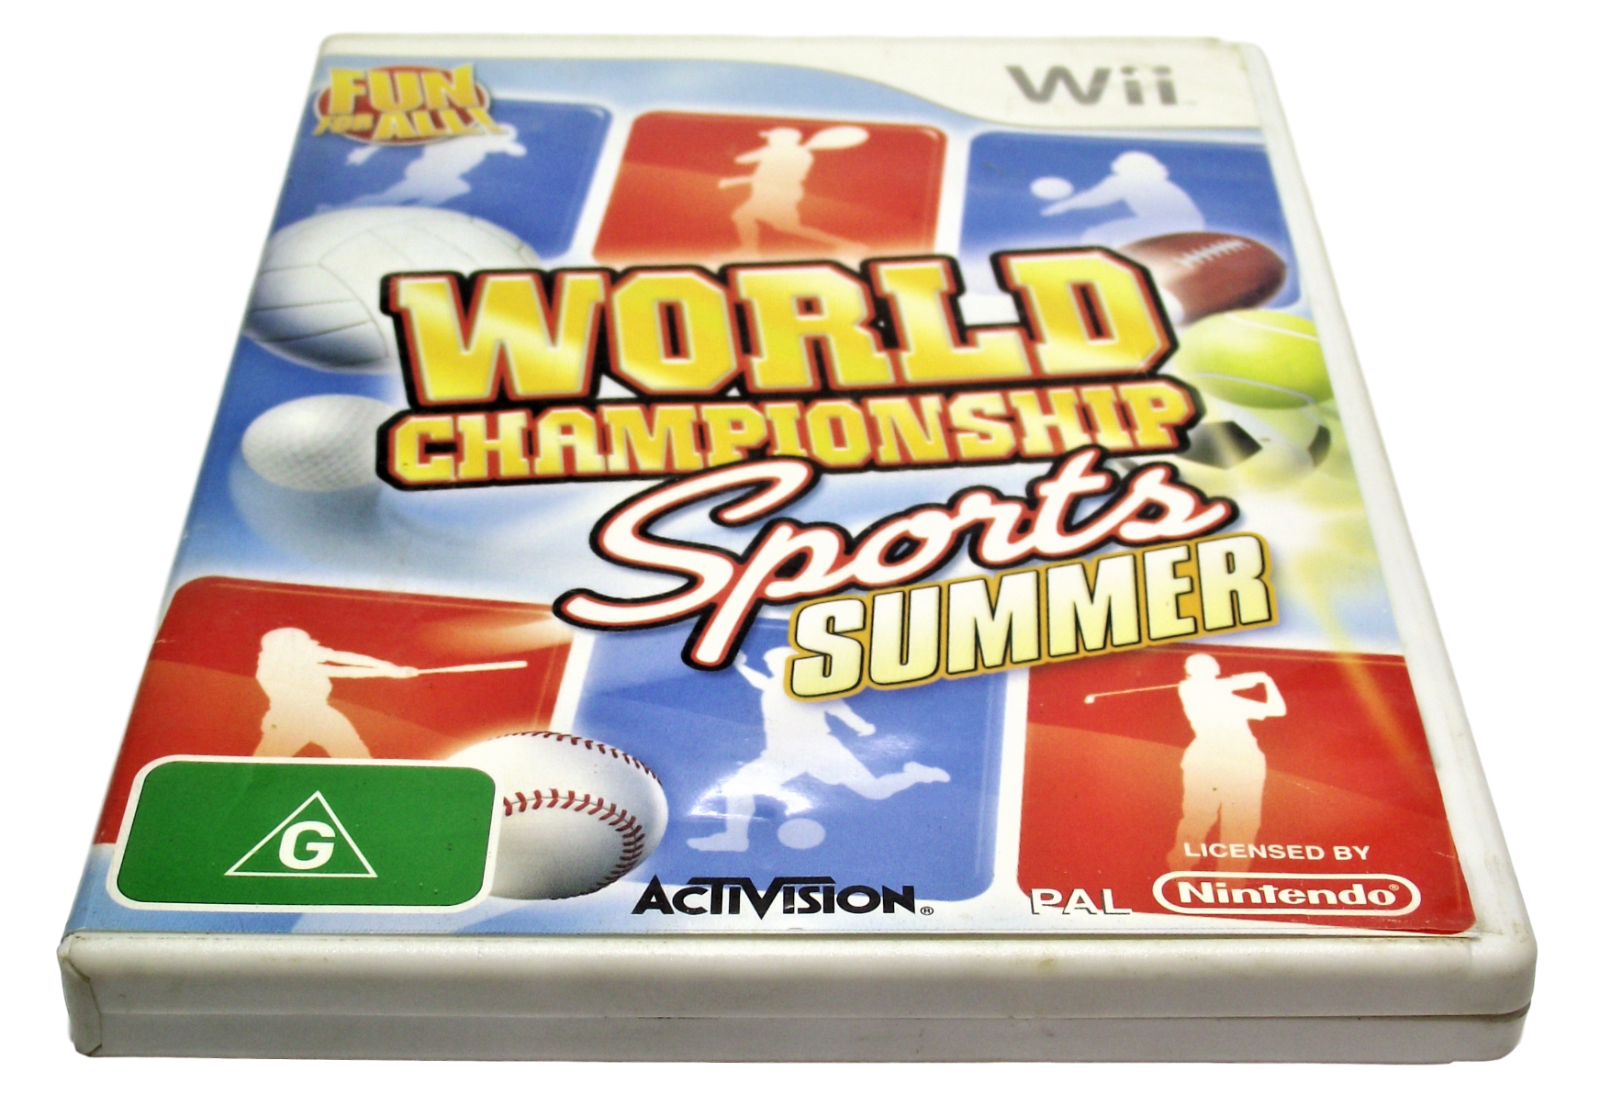 Tegne forsikring Mary bibliotek World Championship Sports Summer Nintendo Wii PAL *No Manual* (Pre-Own